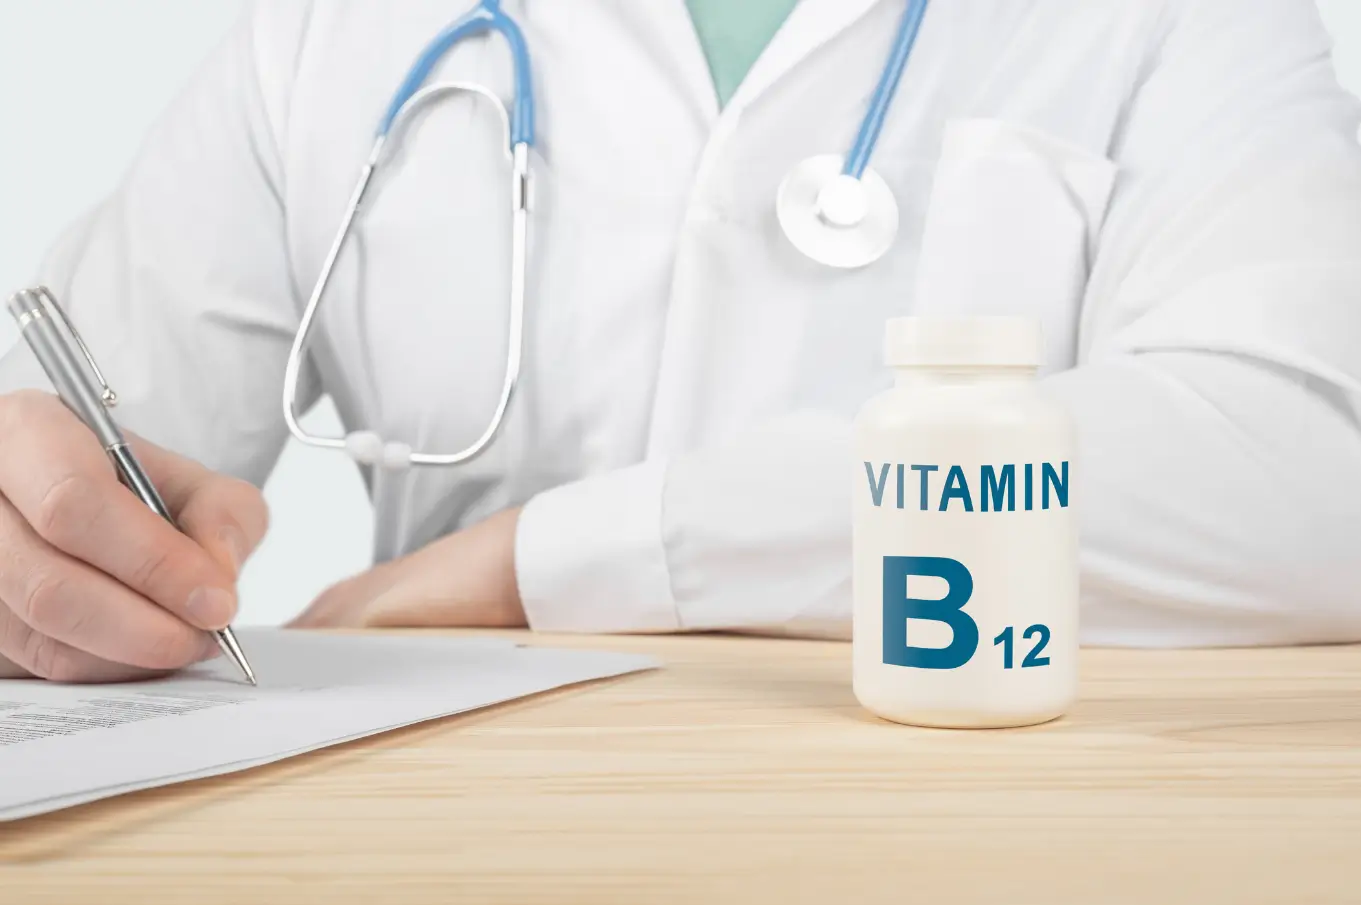 Vitamin b12 injections